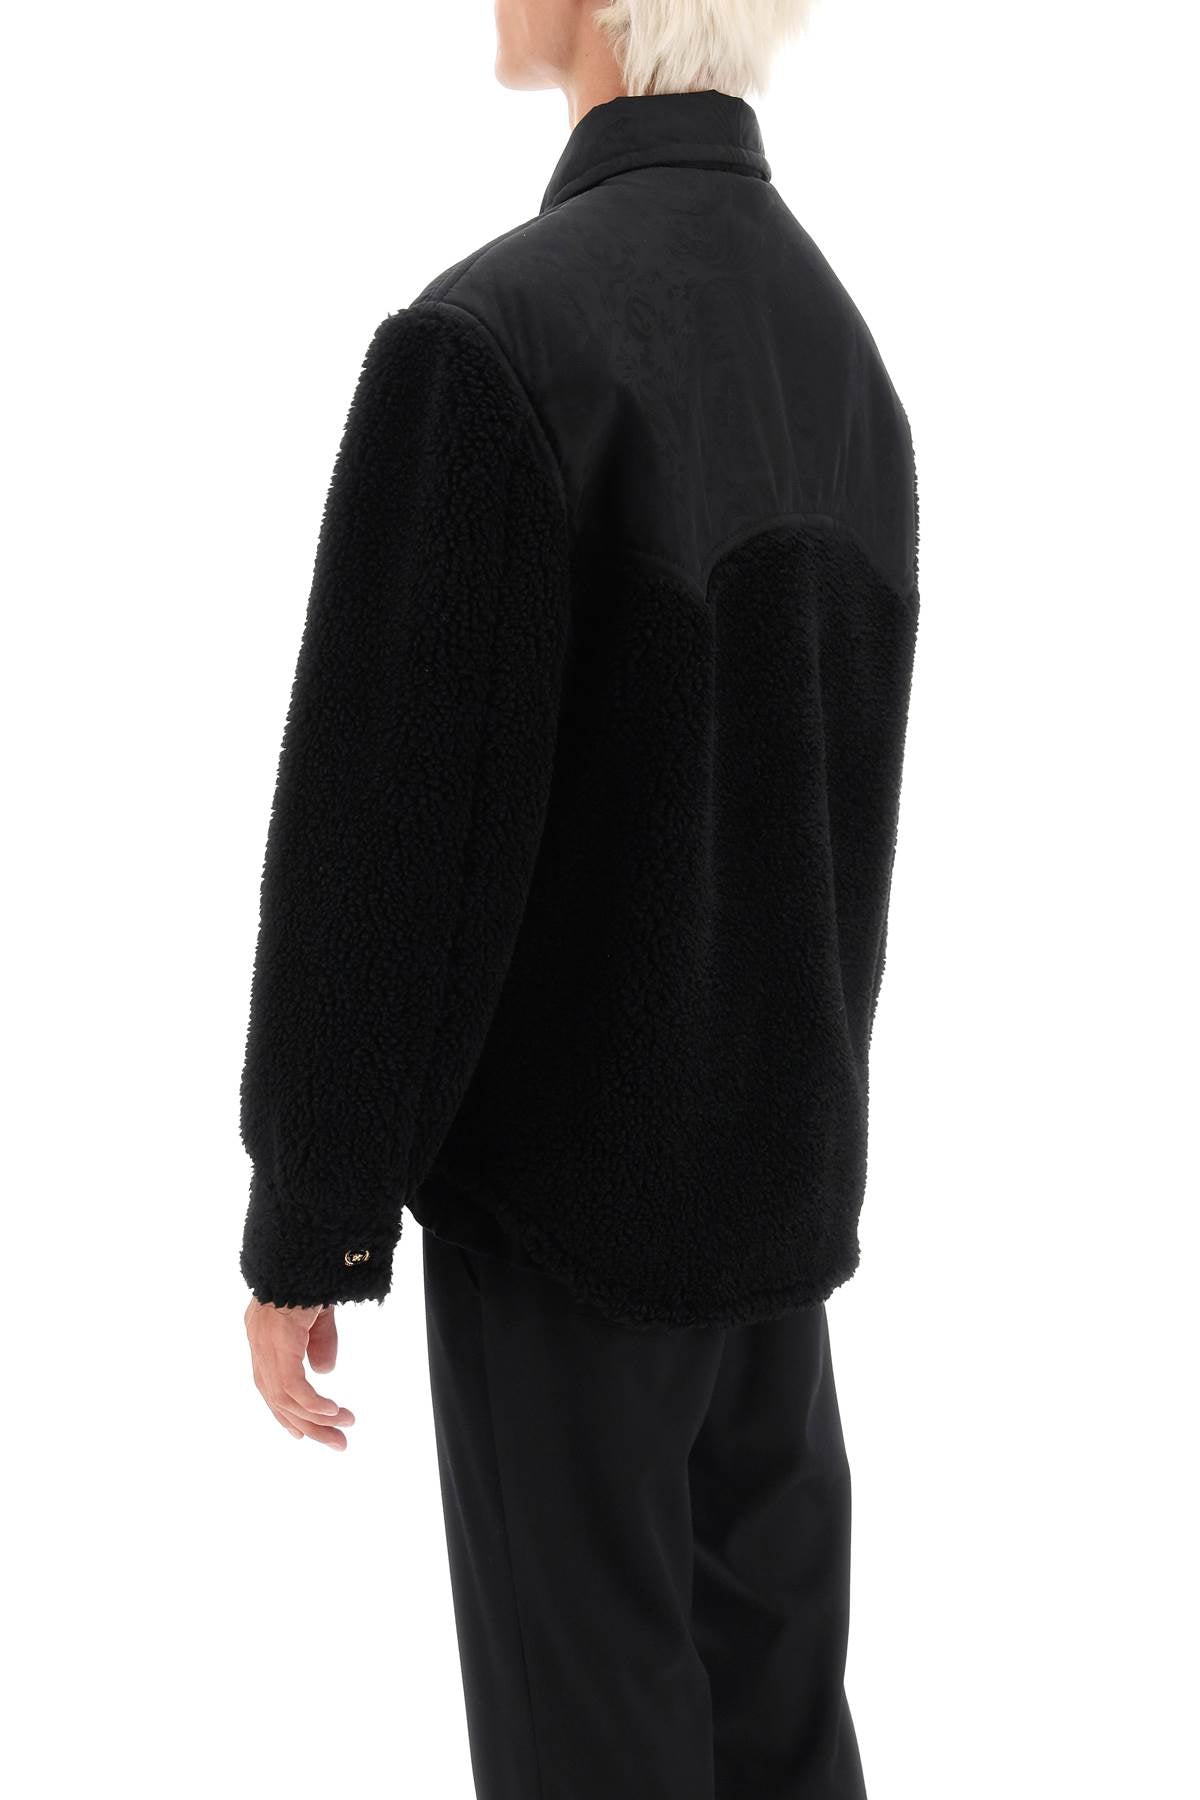 Versace barocco silhouette fleece jacket-2